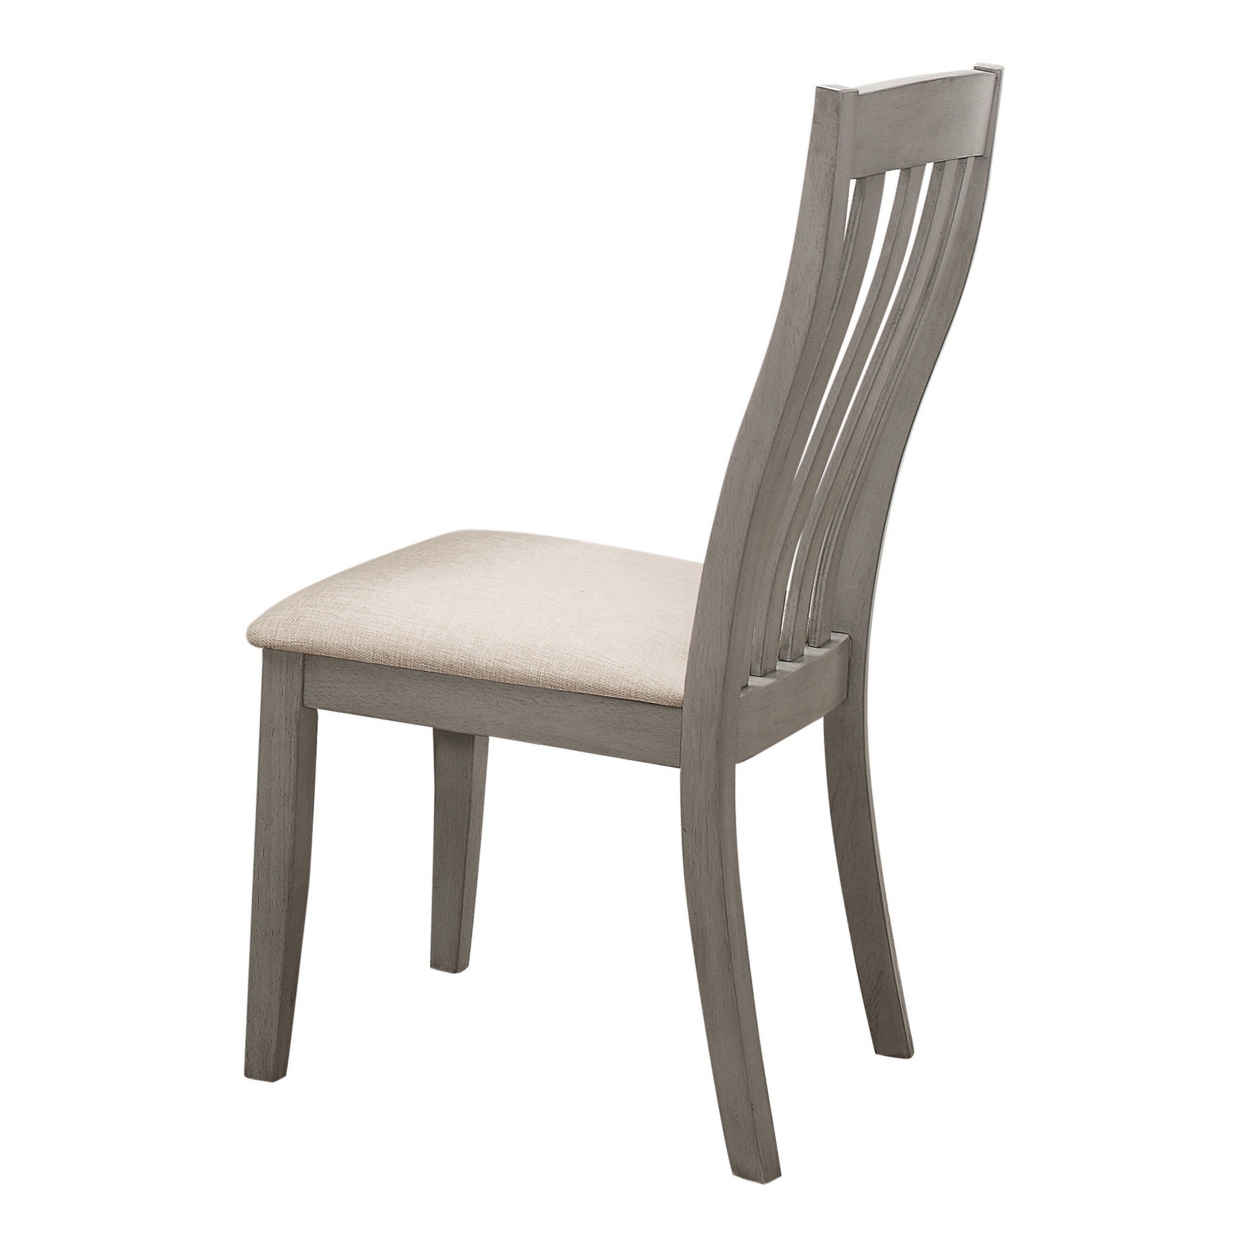 Wooden Side Chair With Slatted Design Backrest, Set Of 2, Gray- Saltoro Sherpi